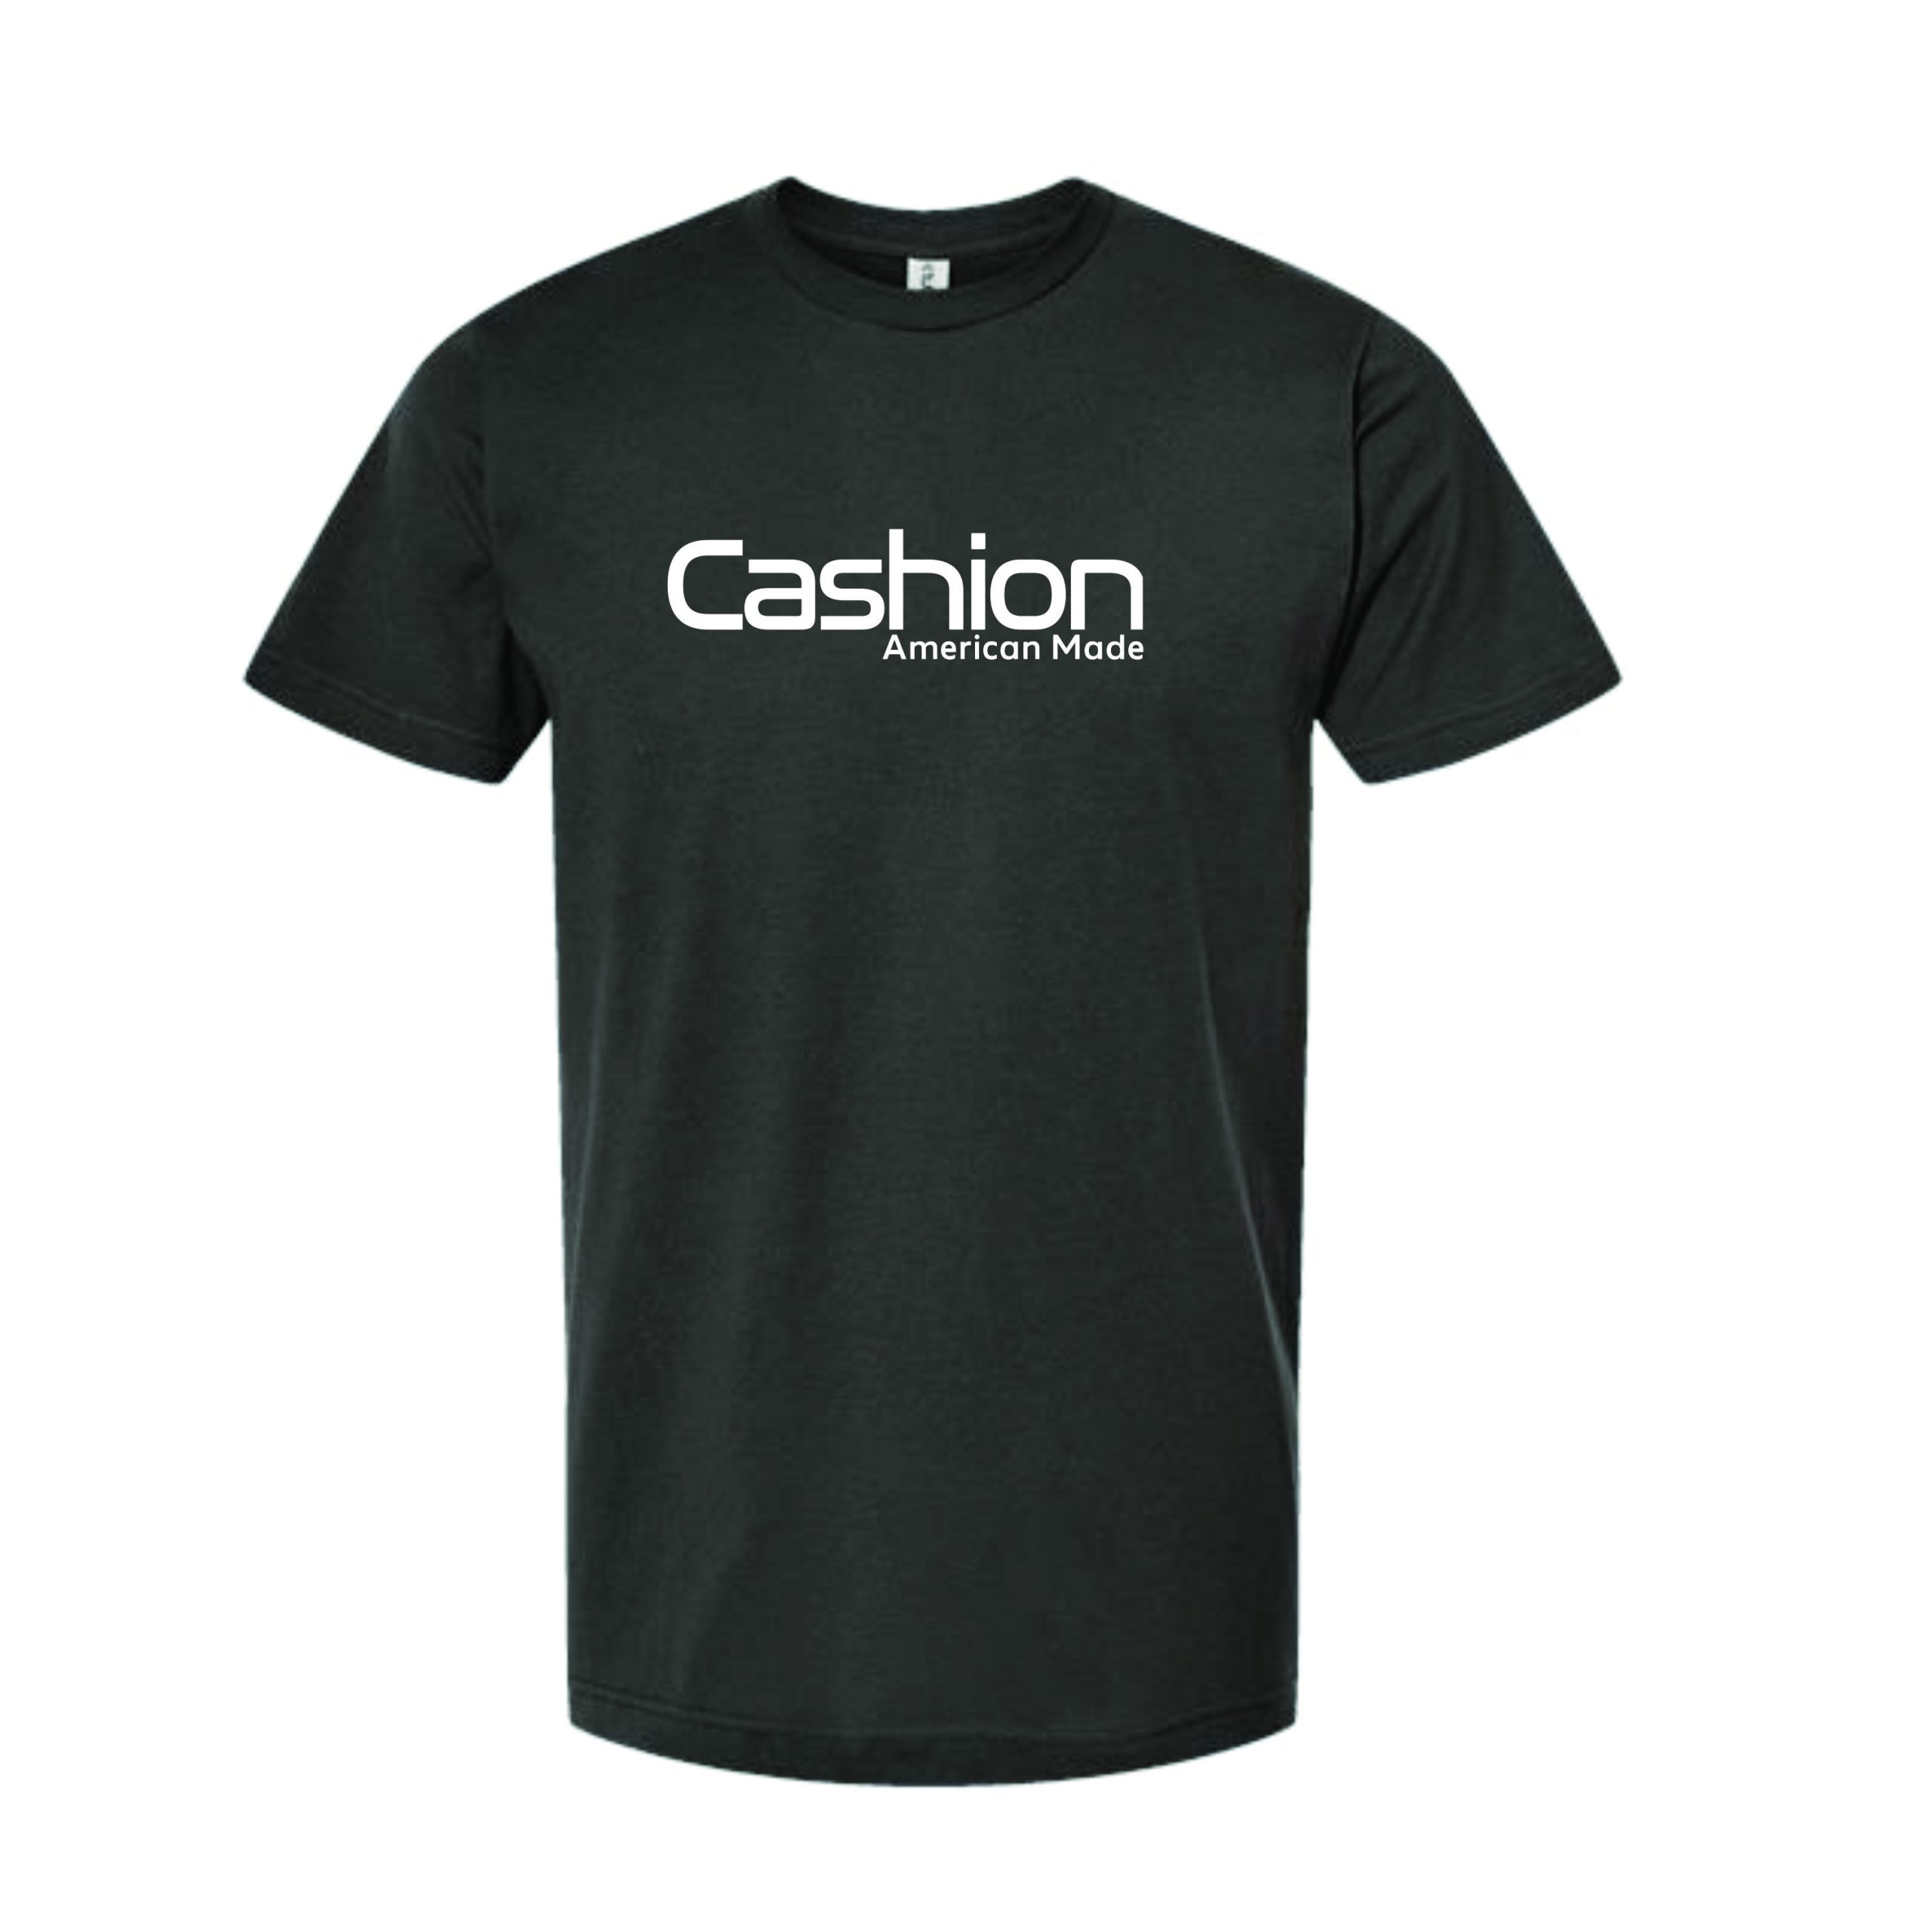 Cashion Charcoal T-Shirt - Cashion Rods